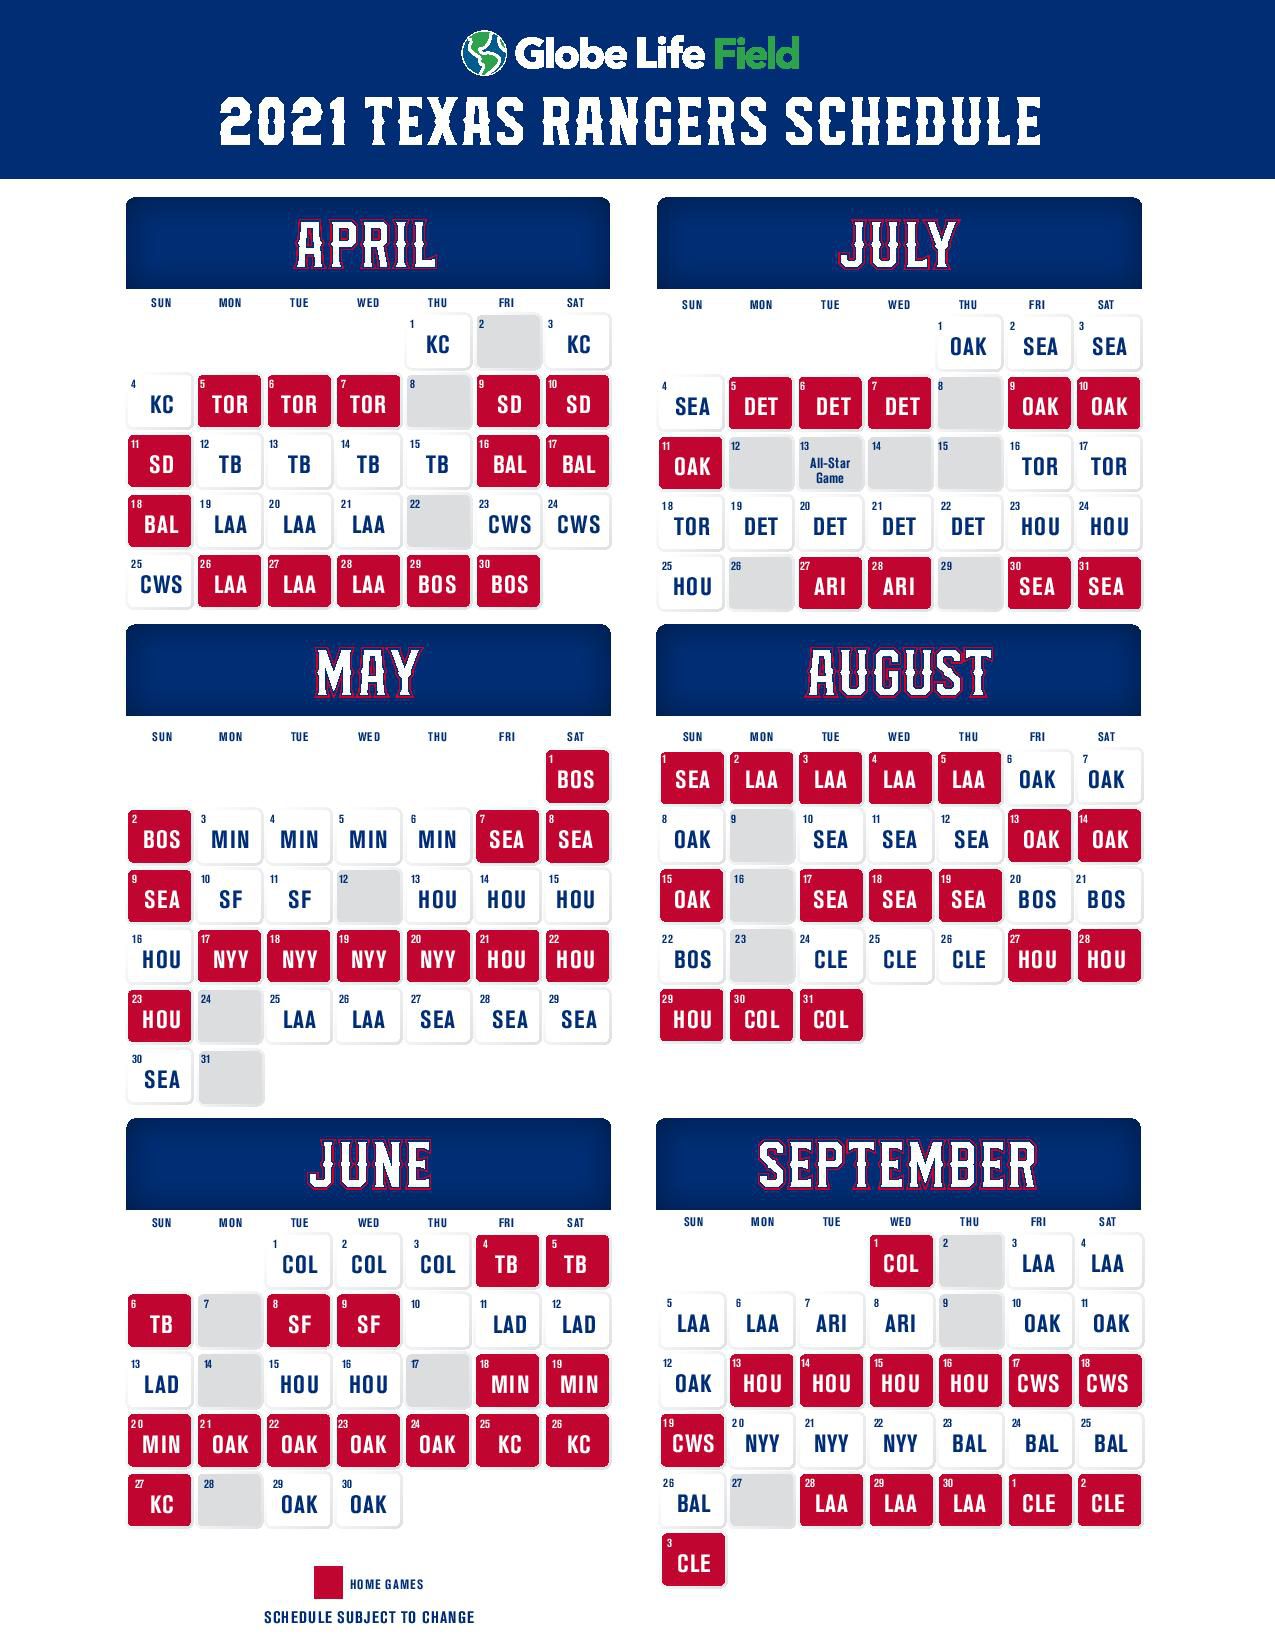 Texas Rangers announce 8 regular season schedule